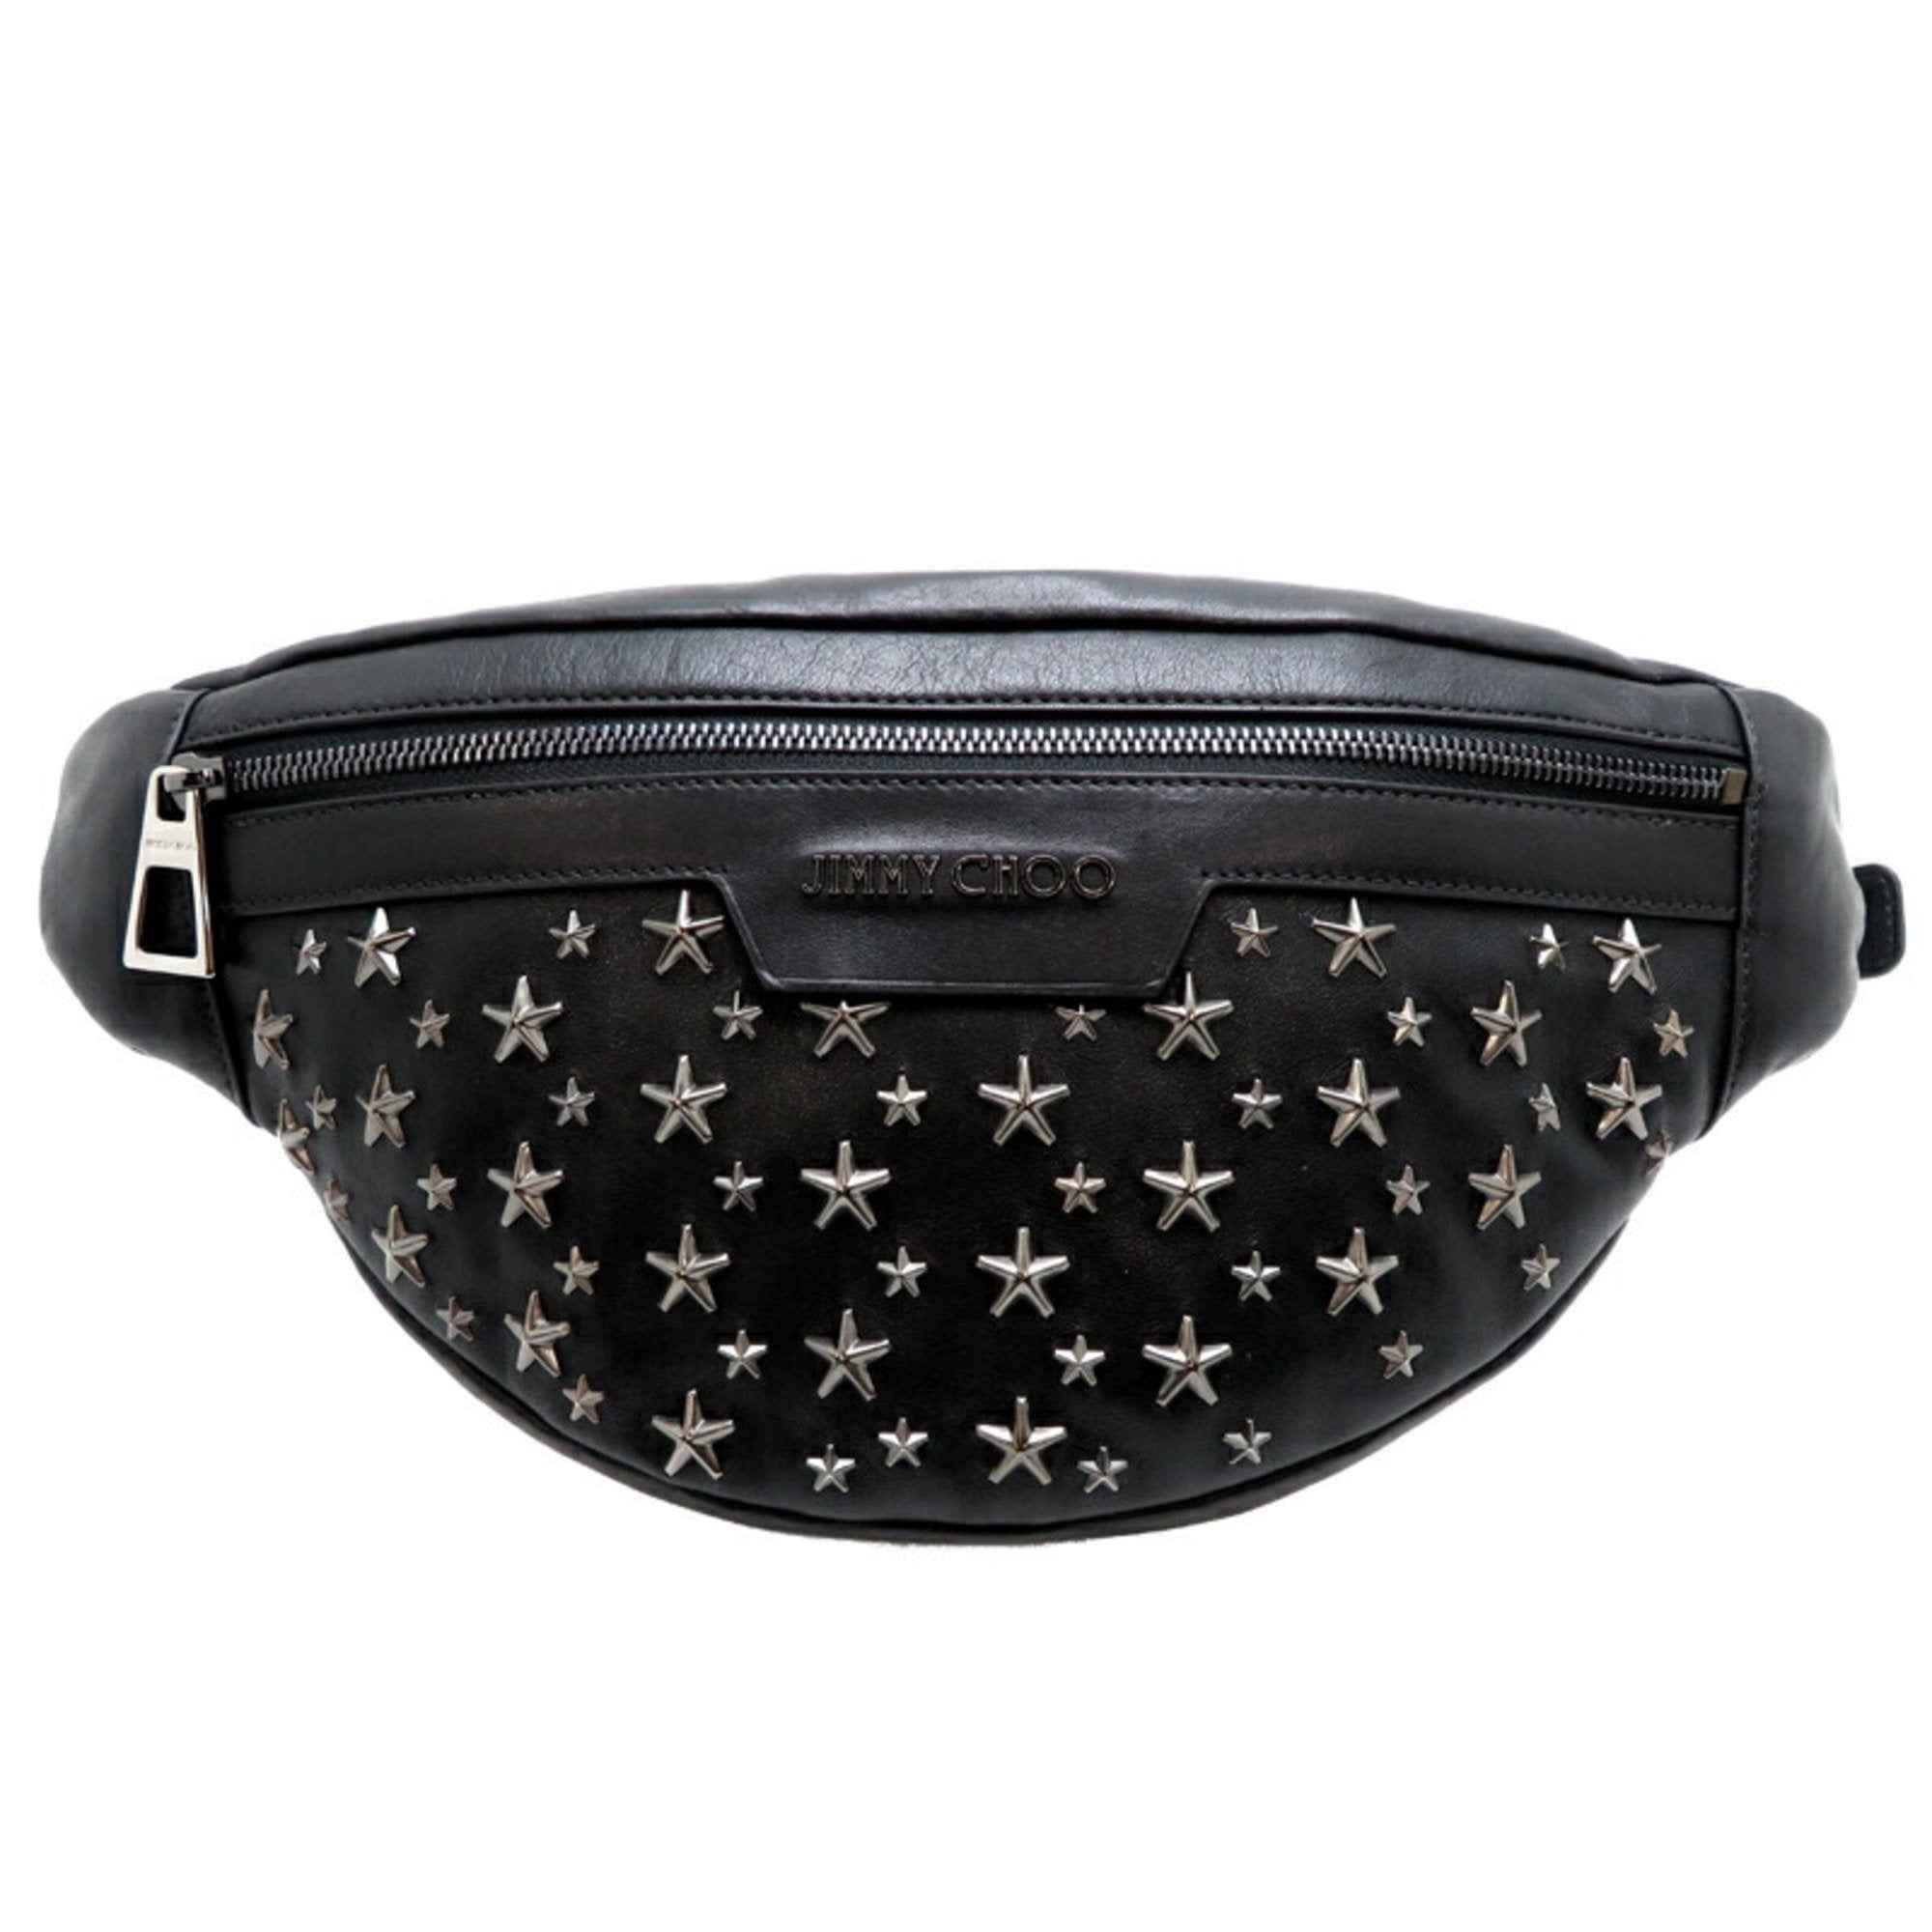 Star Studs Women's Body Bag Leather Black